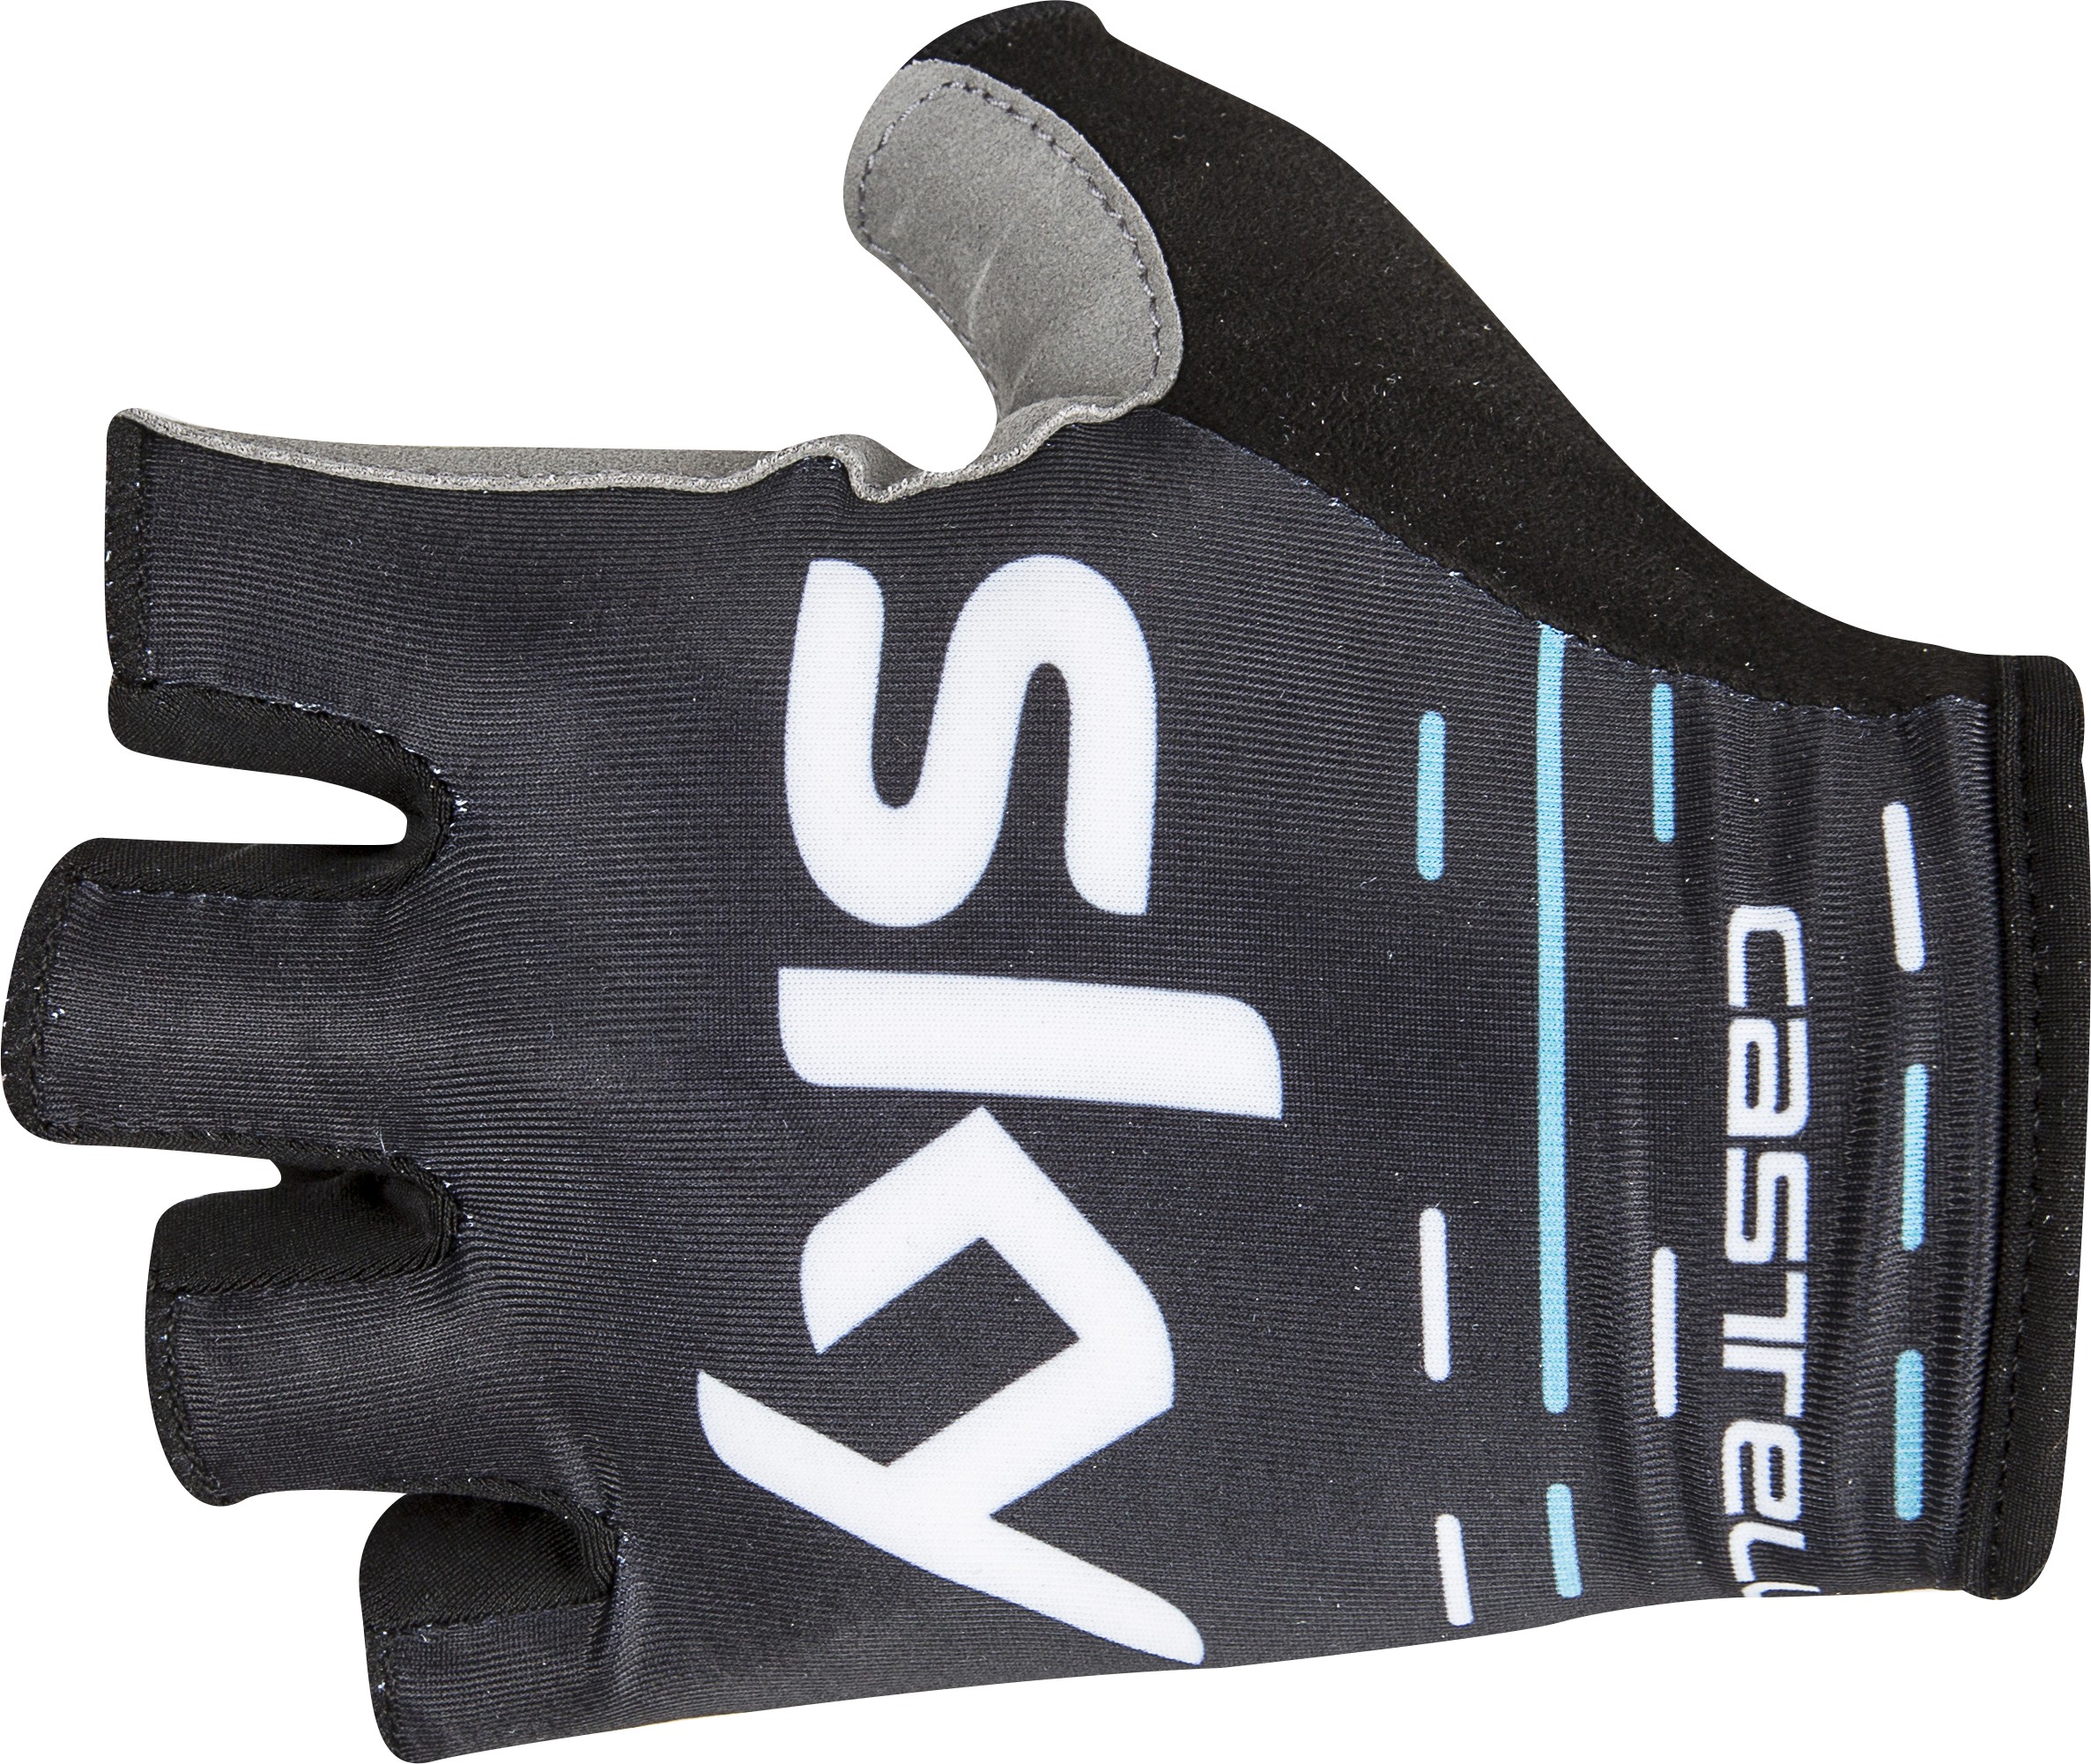 TEAM SKY 2017 Roubaix Glove Black